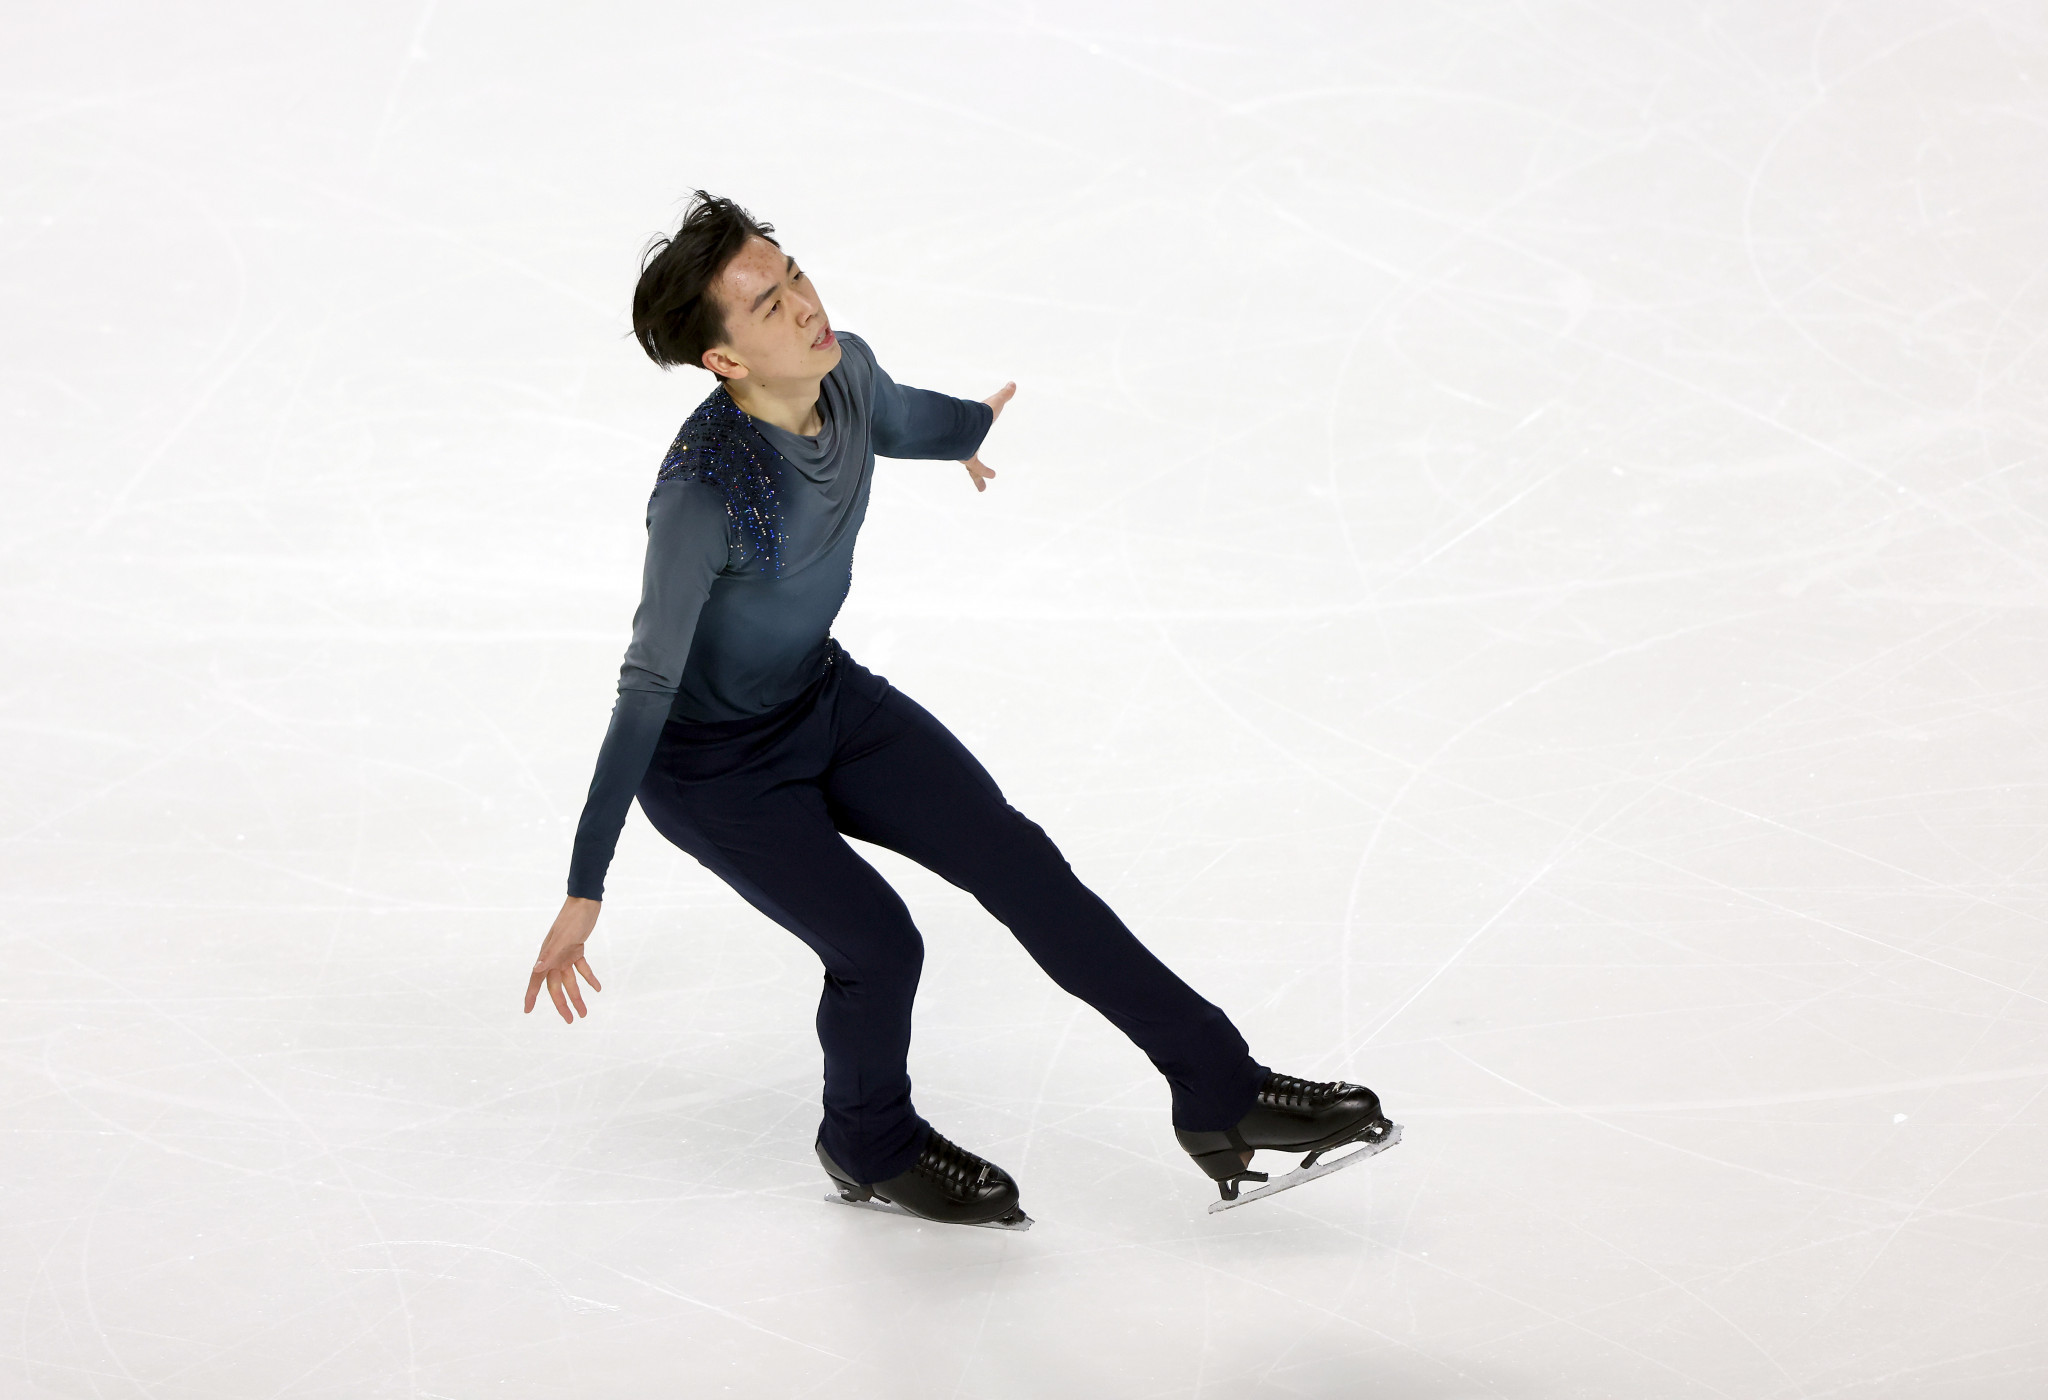 American figure skater Zhou targeting Beijing 2022 medal